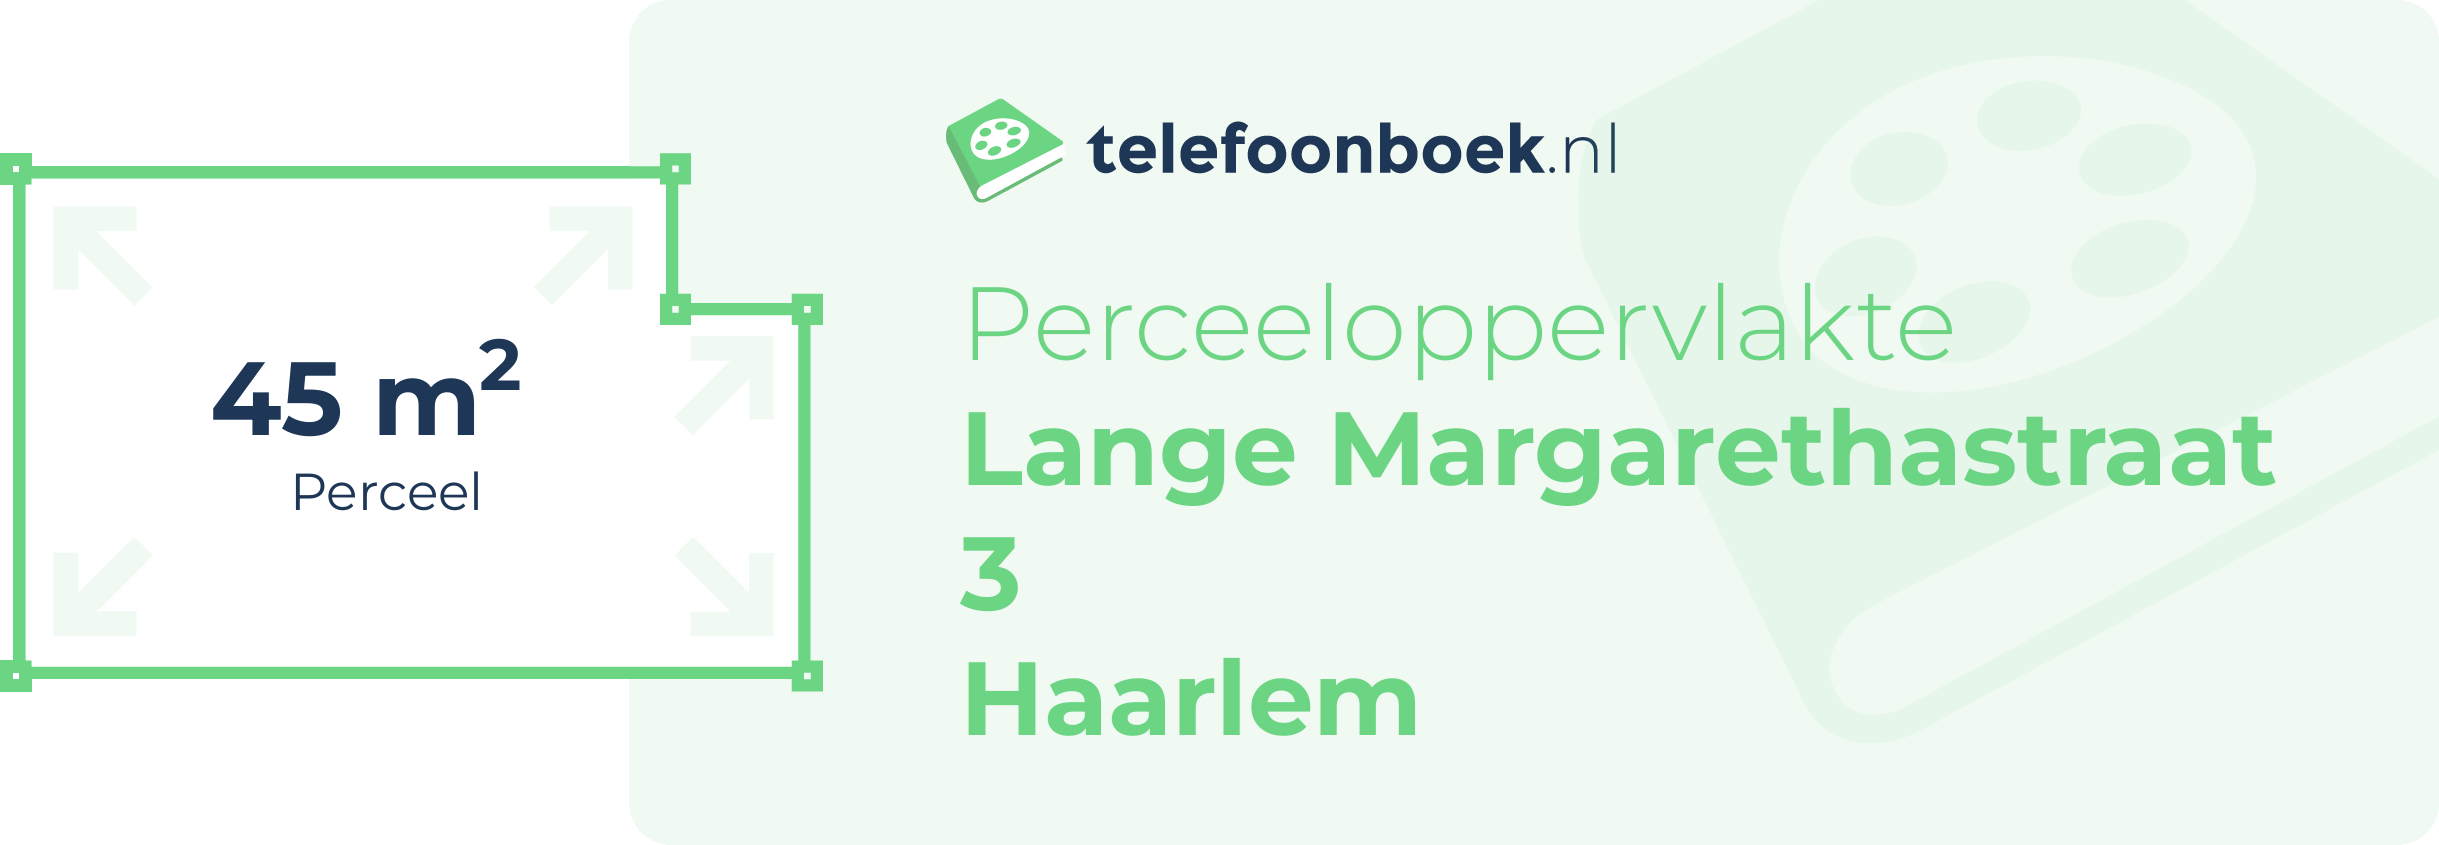 Perceeloppervlakte Lange Margarethastraat 3 Haarlem